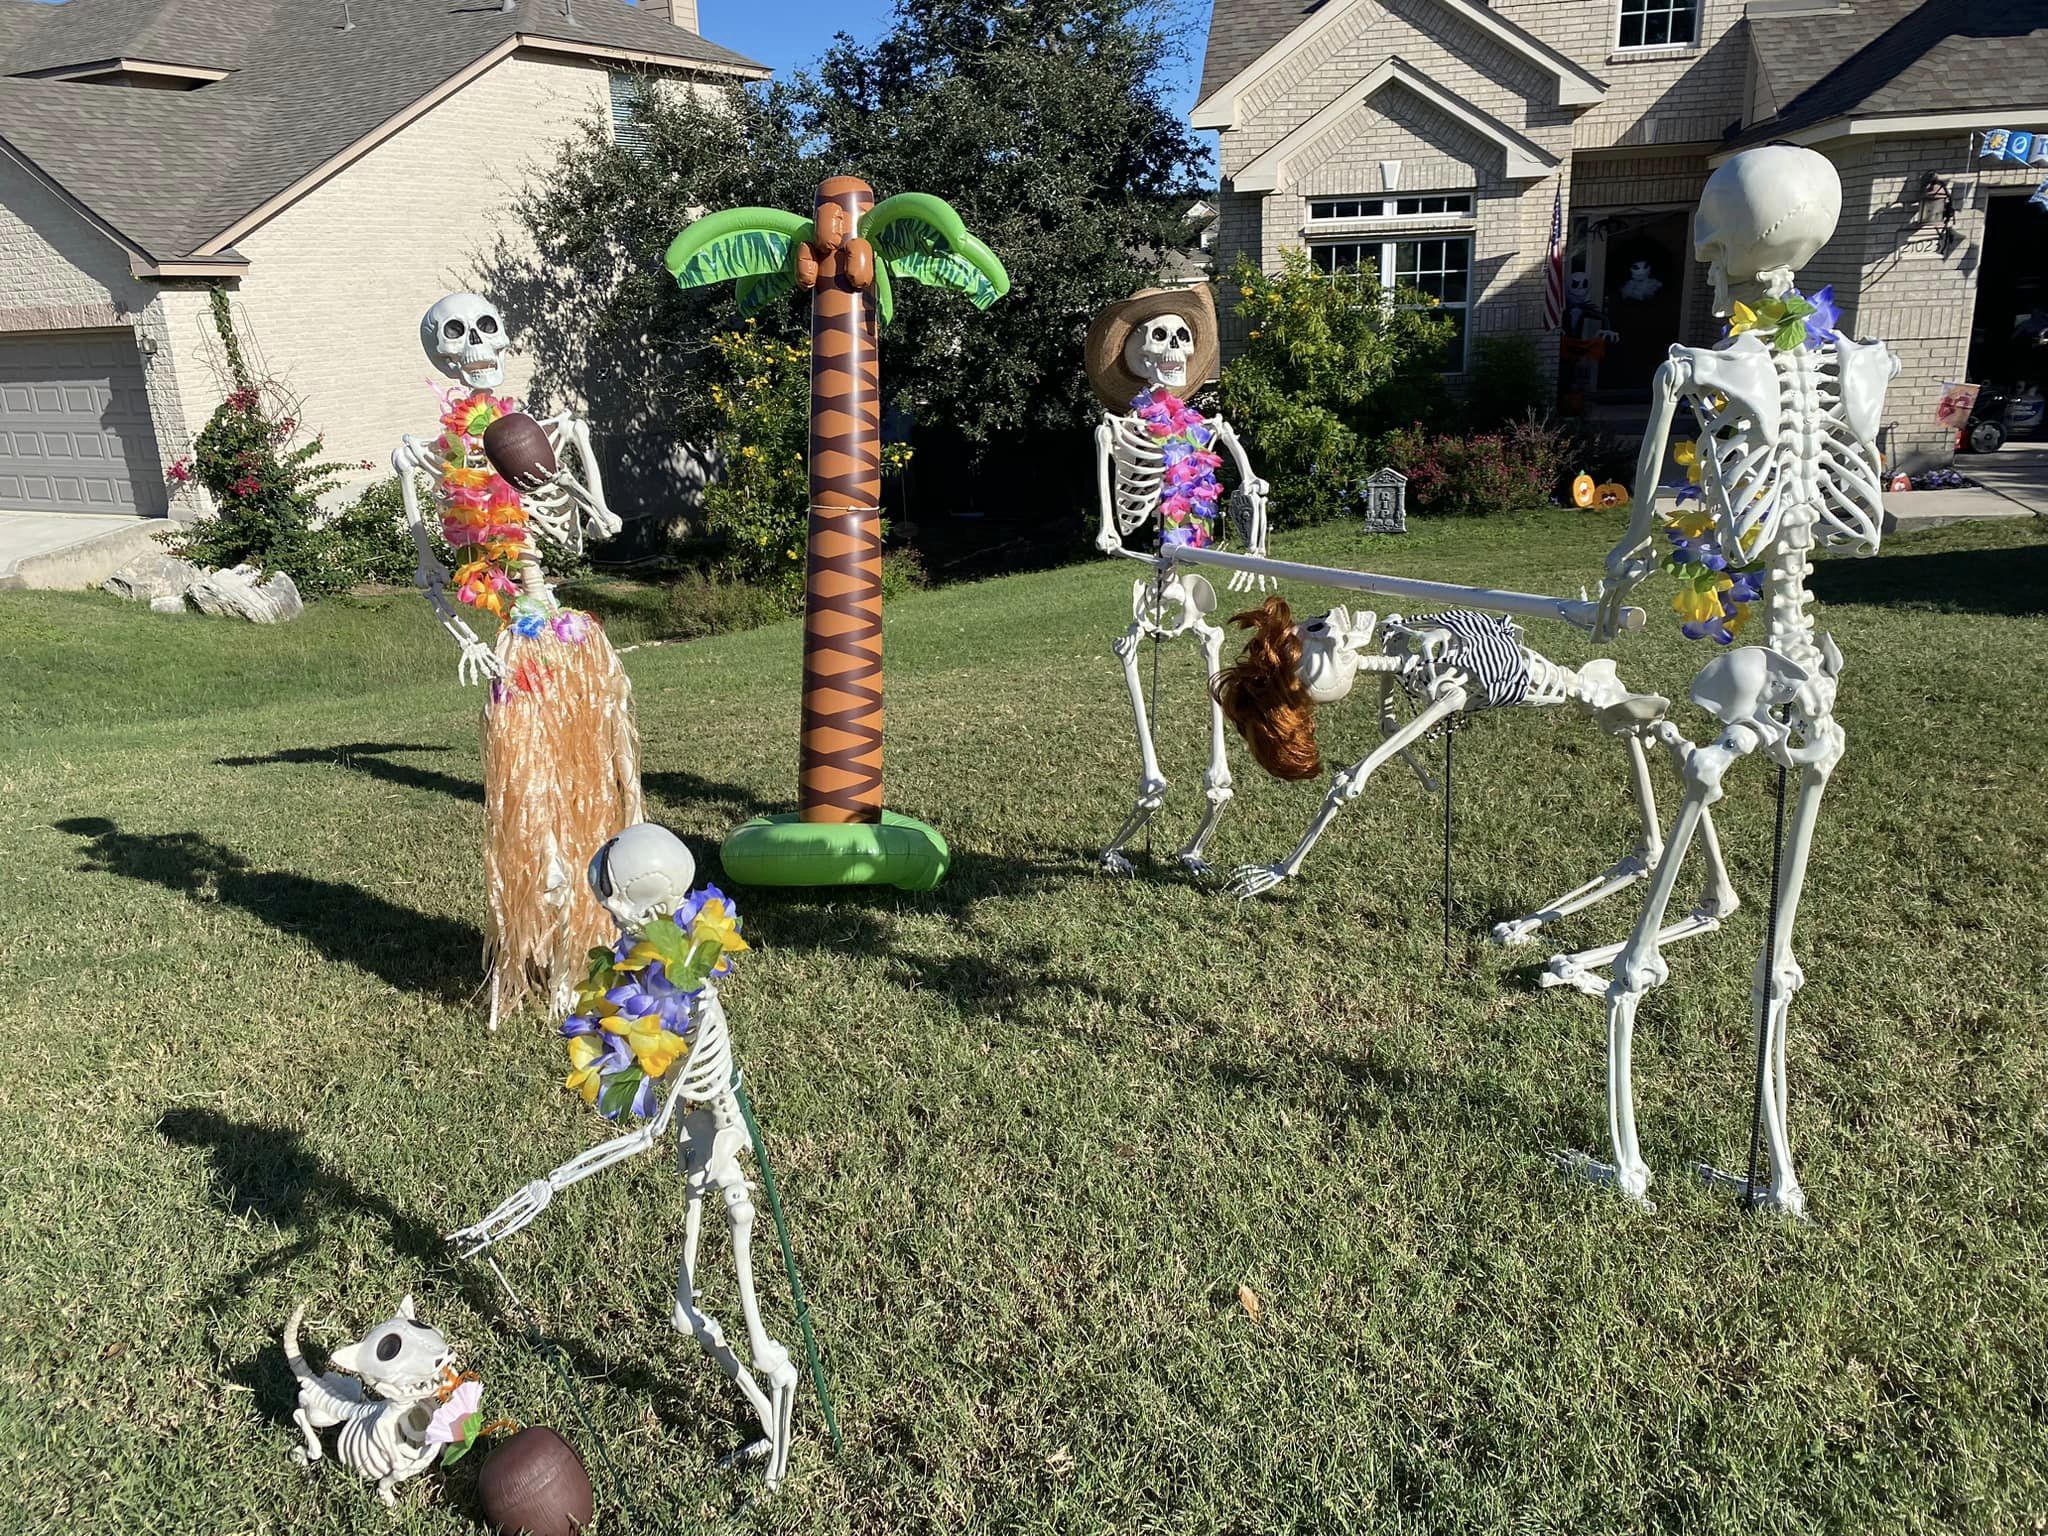 Skeleton House of San Antonio display of skeletons holding a luau